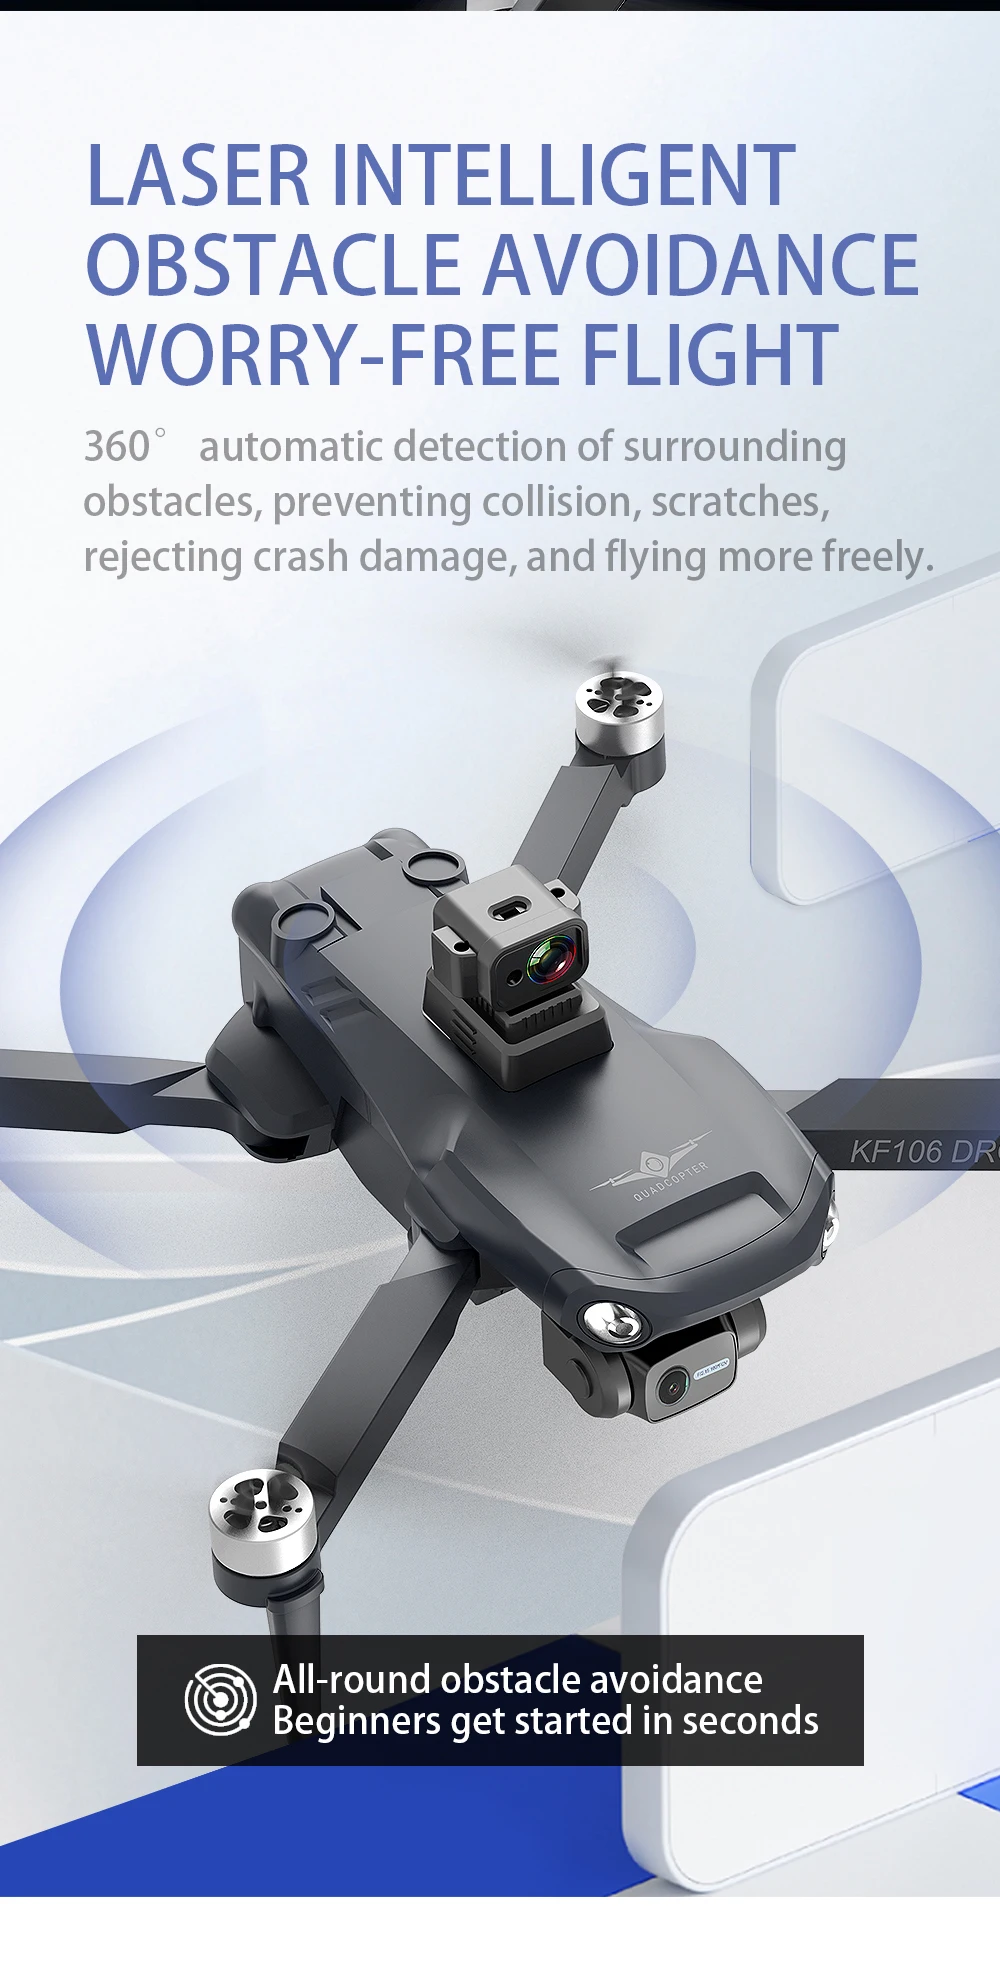 KFPLAN KF106 Drone, LASER INTELLIGENT OBSTACLE AVOIDANCE WORRY-